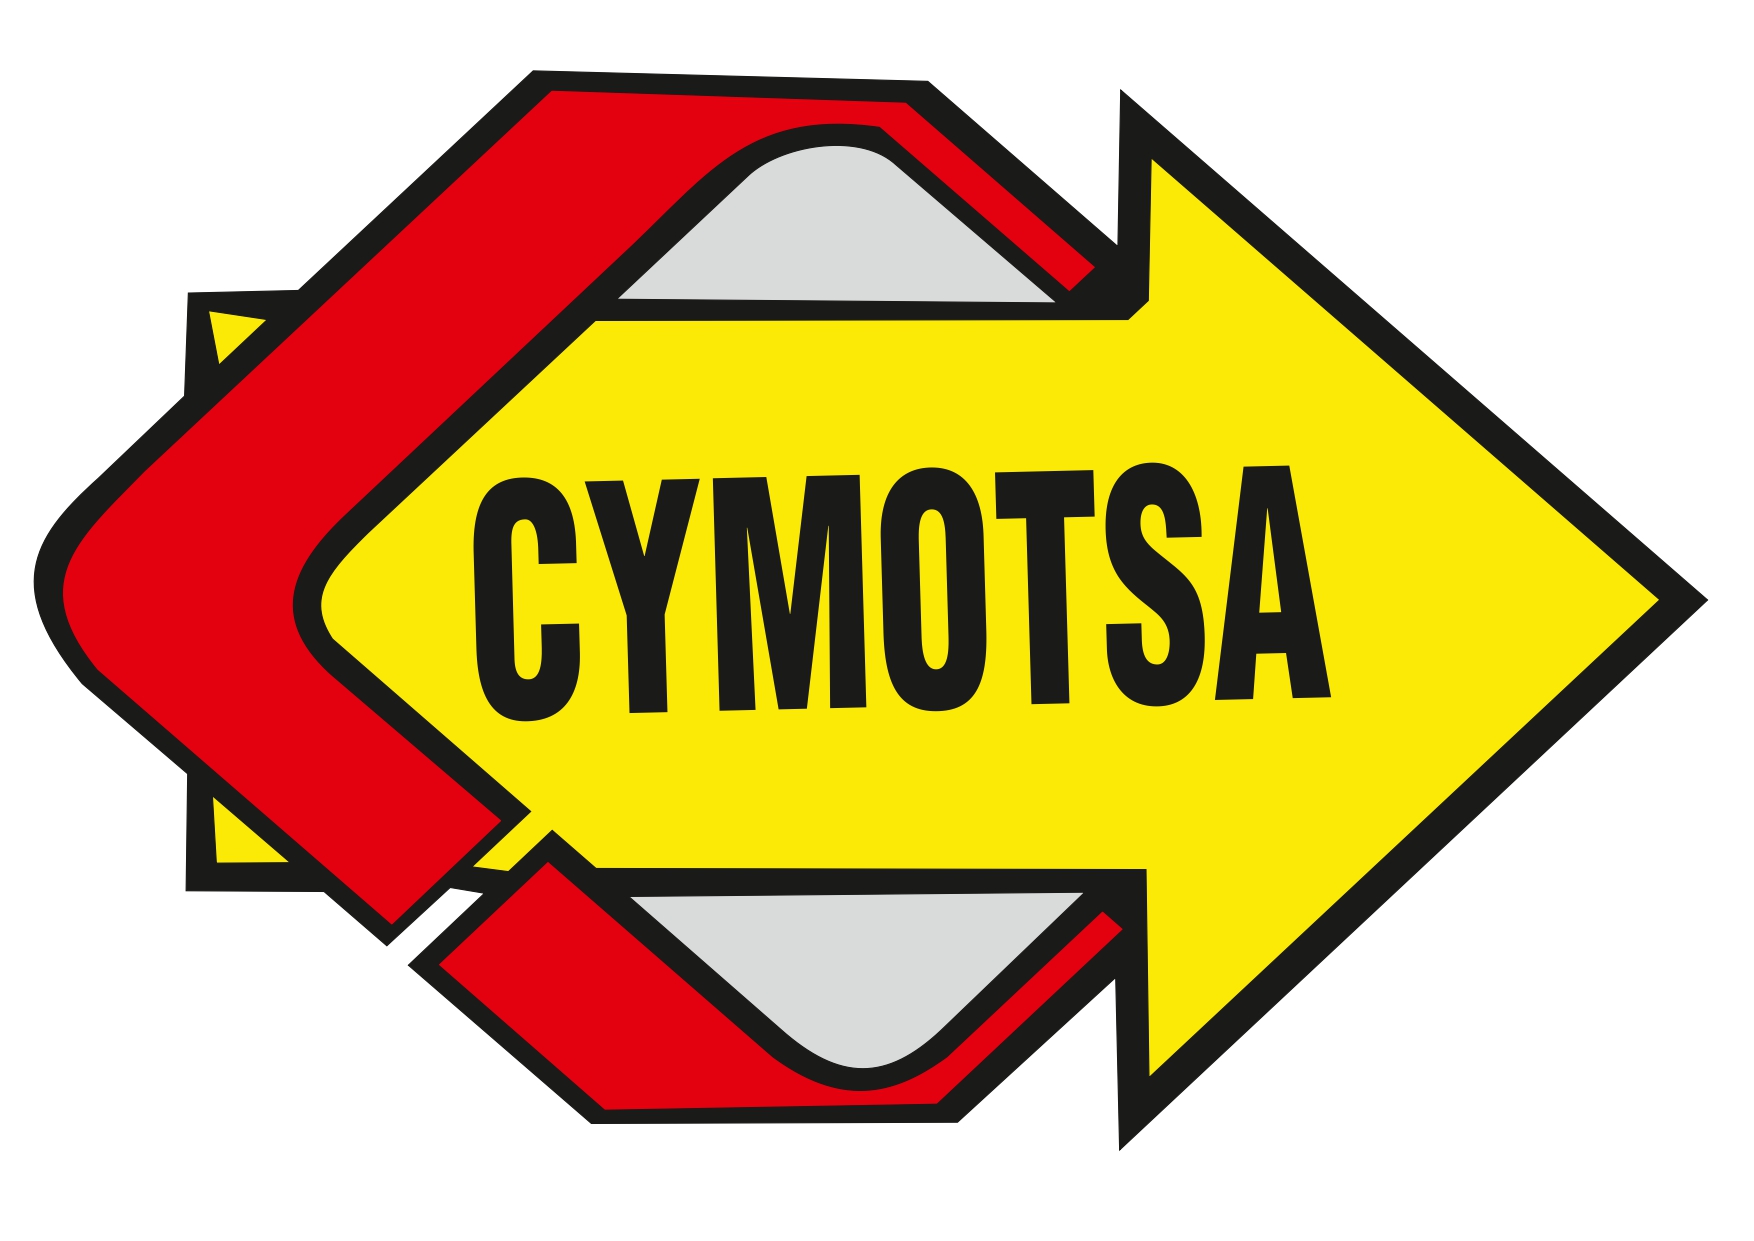 Cymotsa